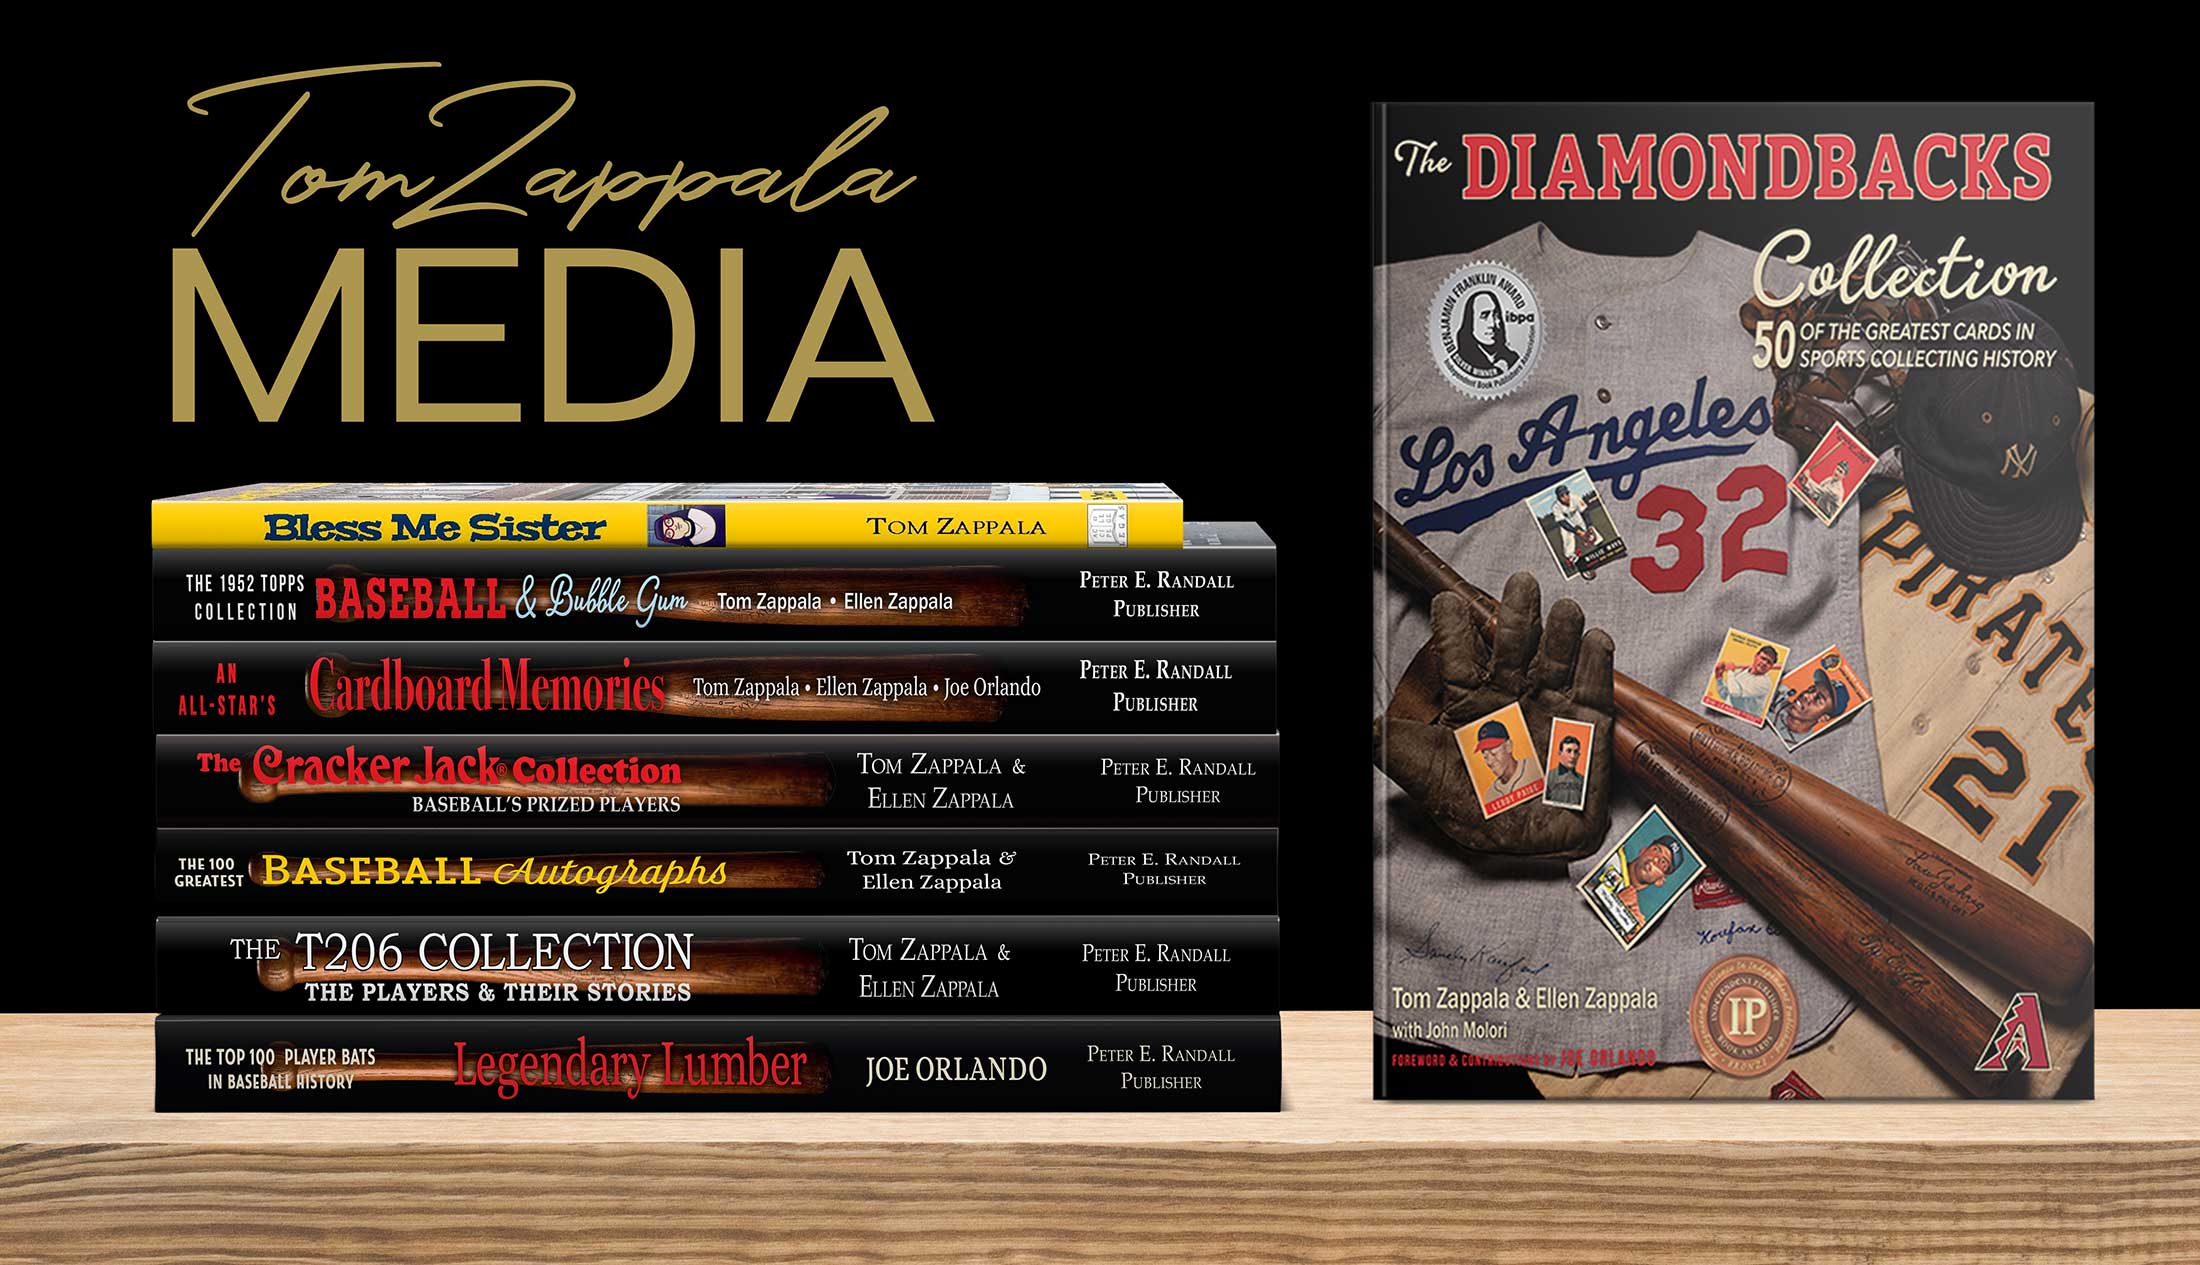 Tom Zappala Media - Award-Winning Baseball Books